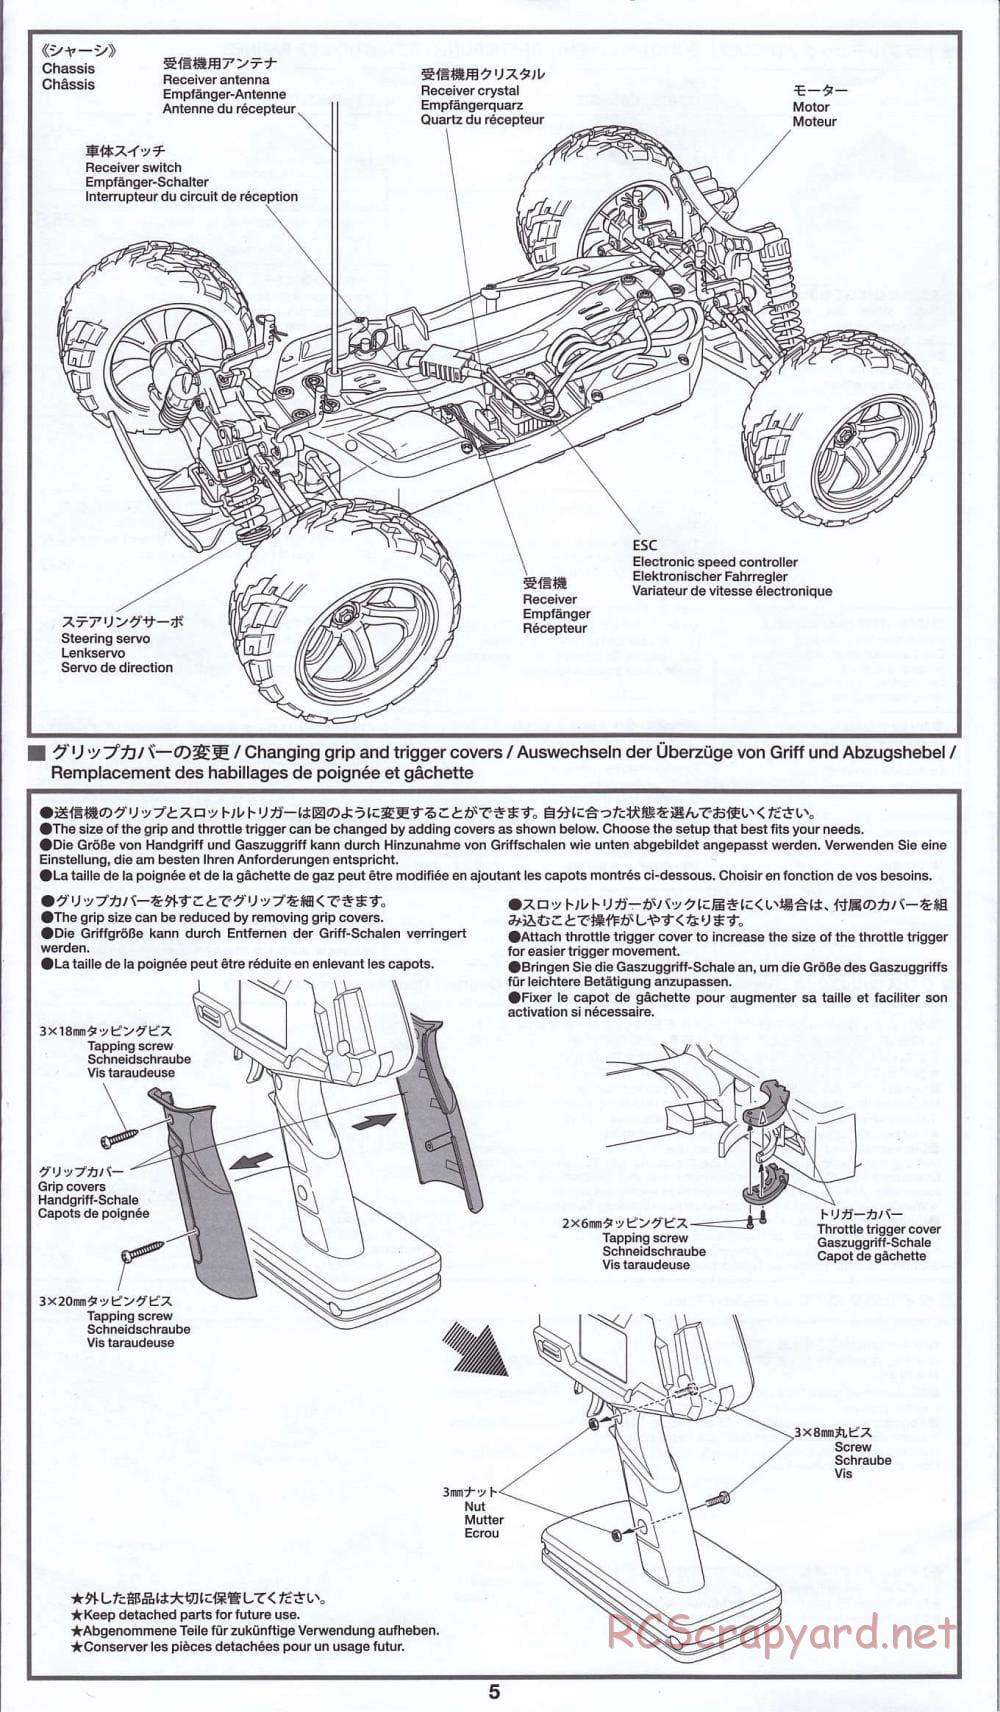 Tamiya - XB Super Levant - TB-01 Chassis - Manual - Page 5